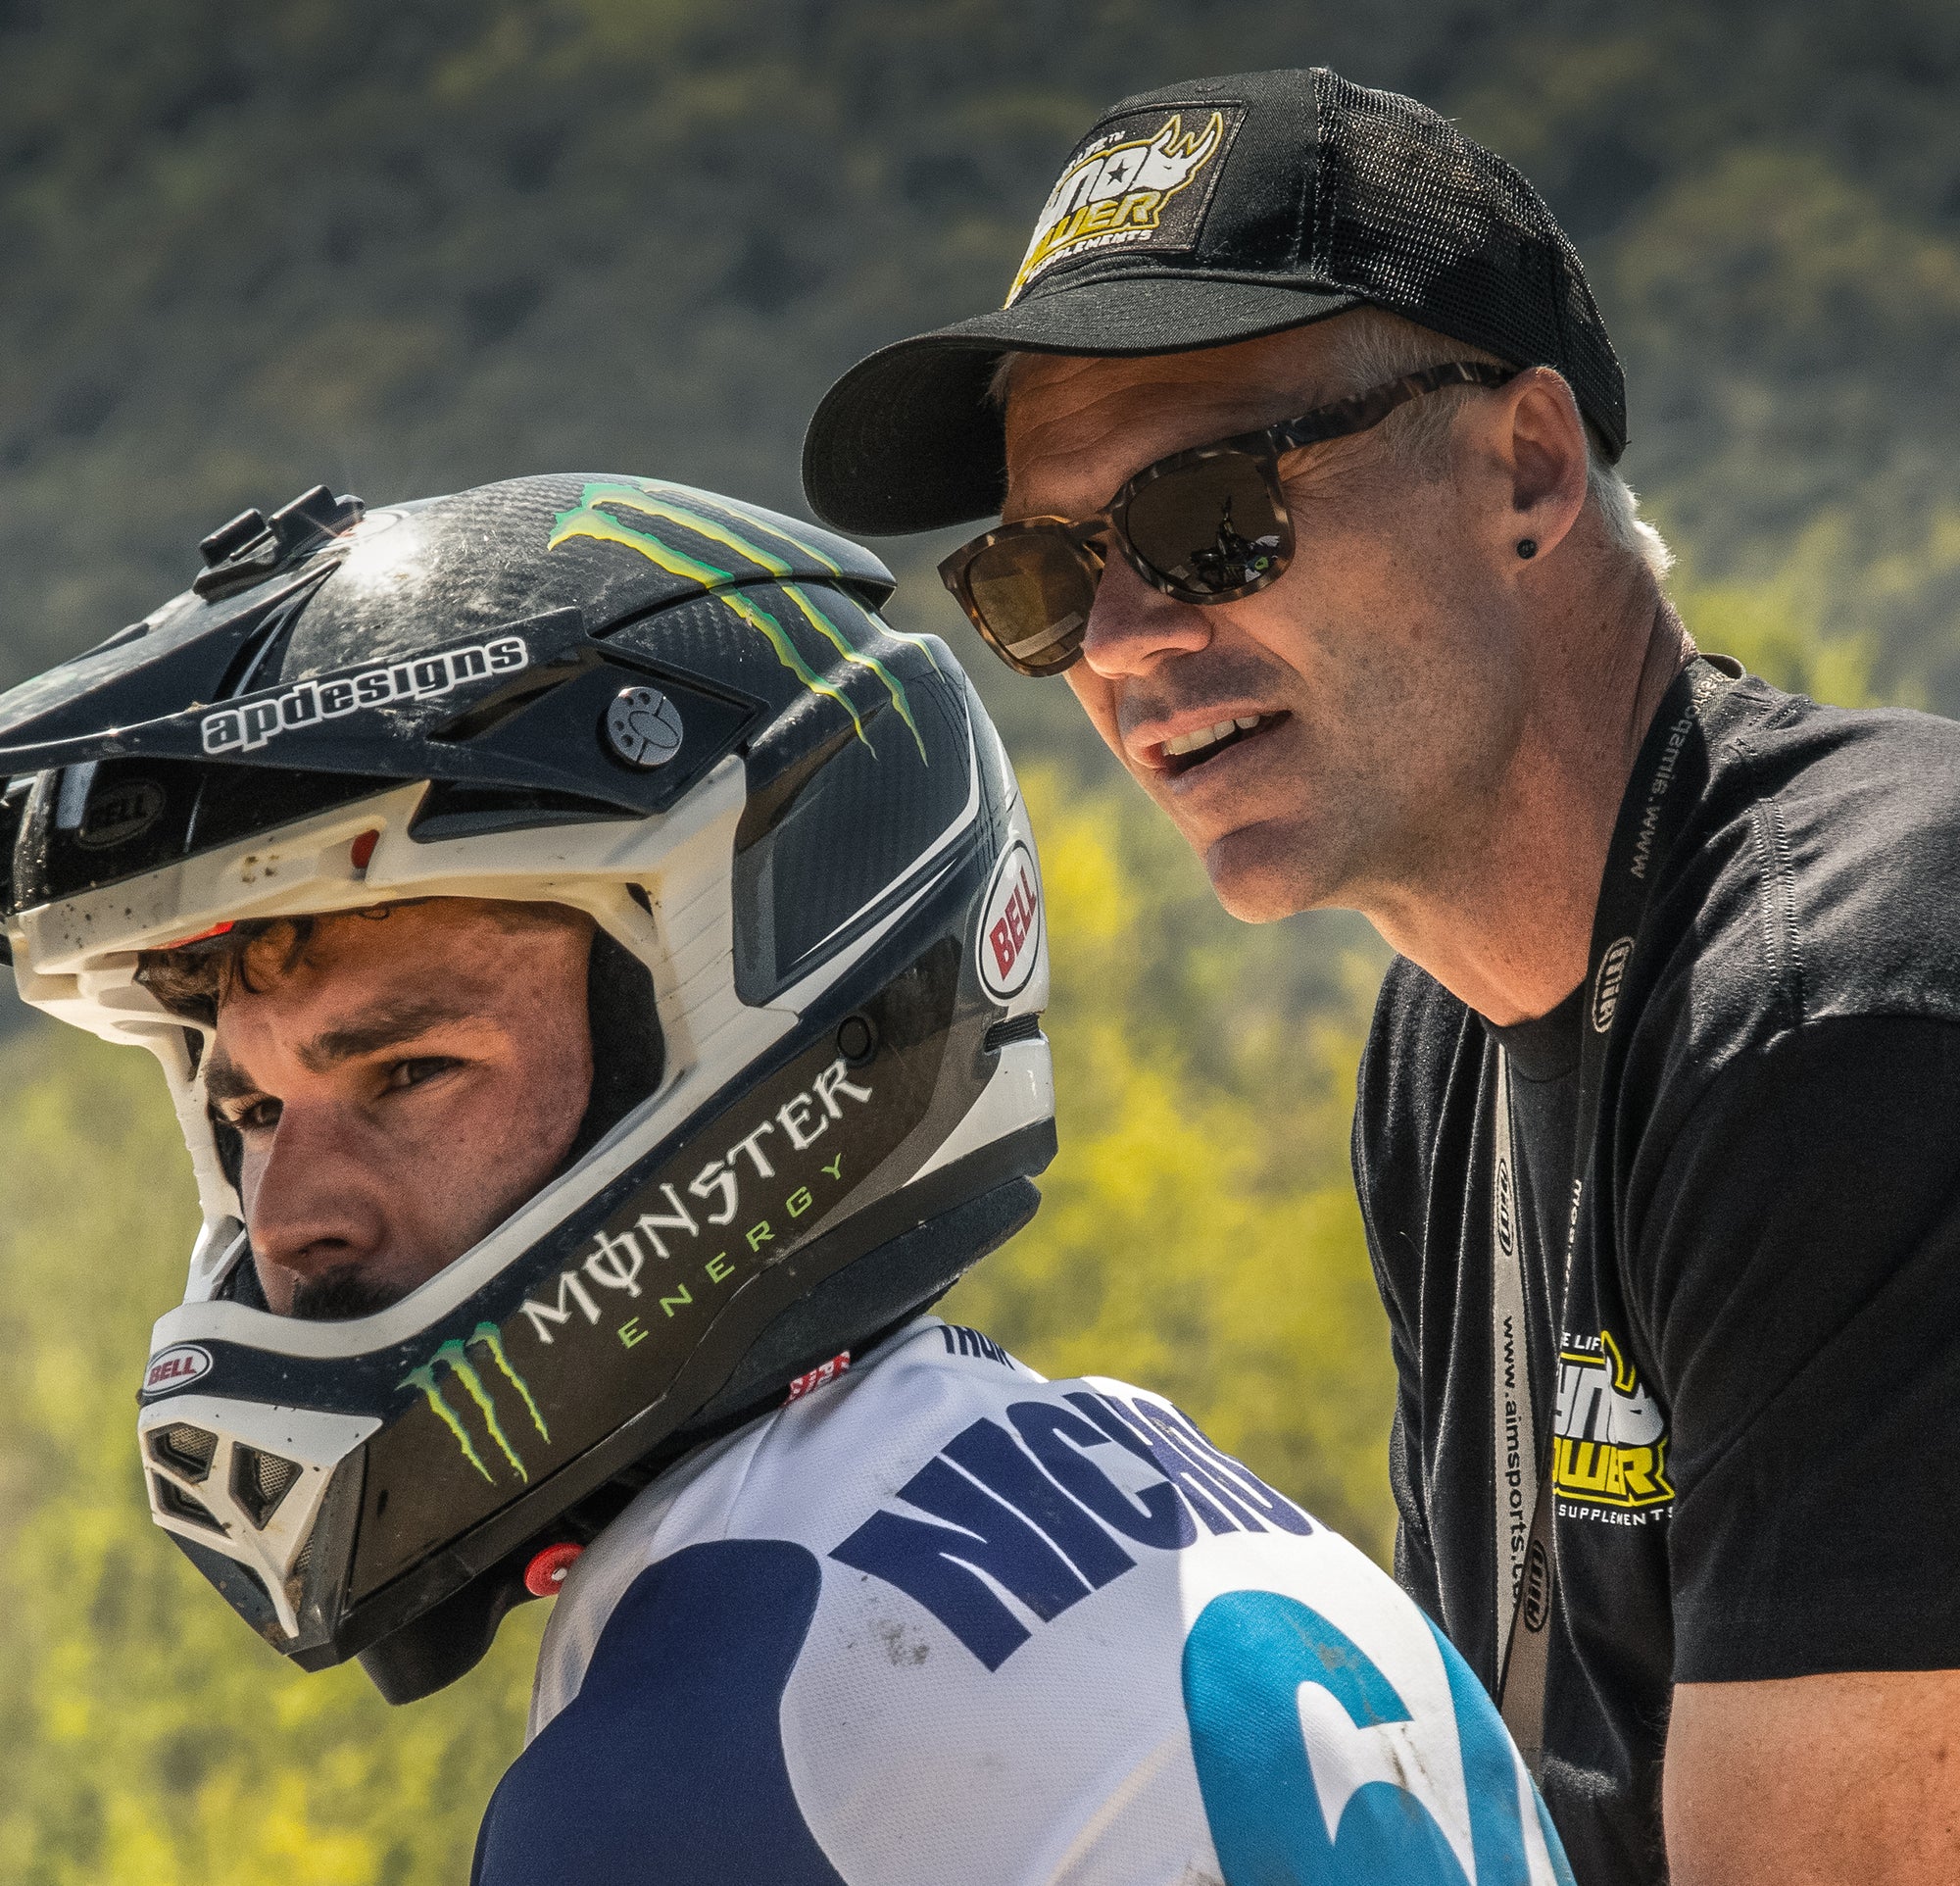 Motocross trainer talking to athlete